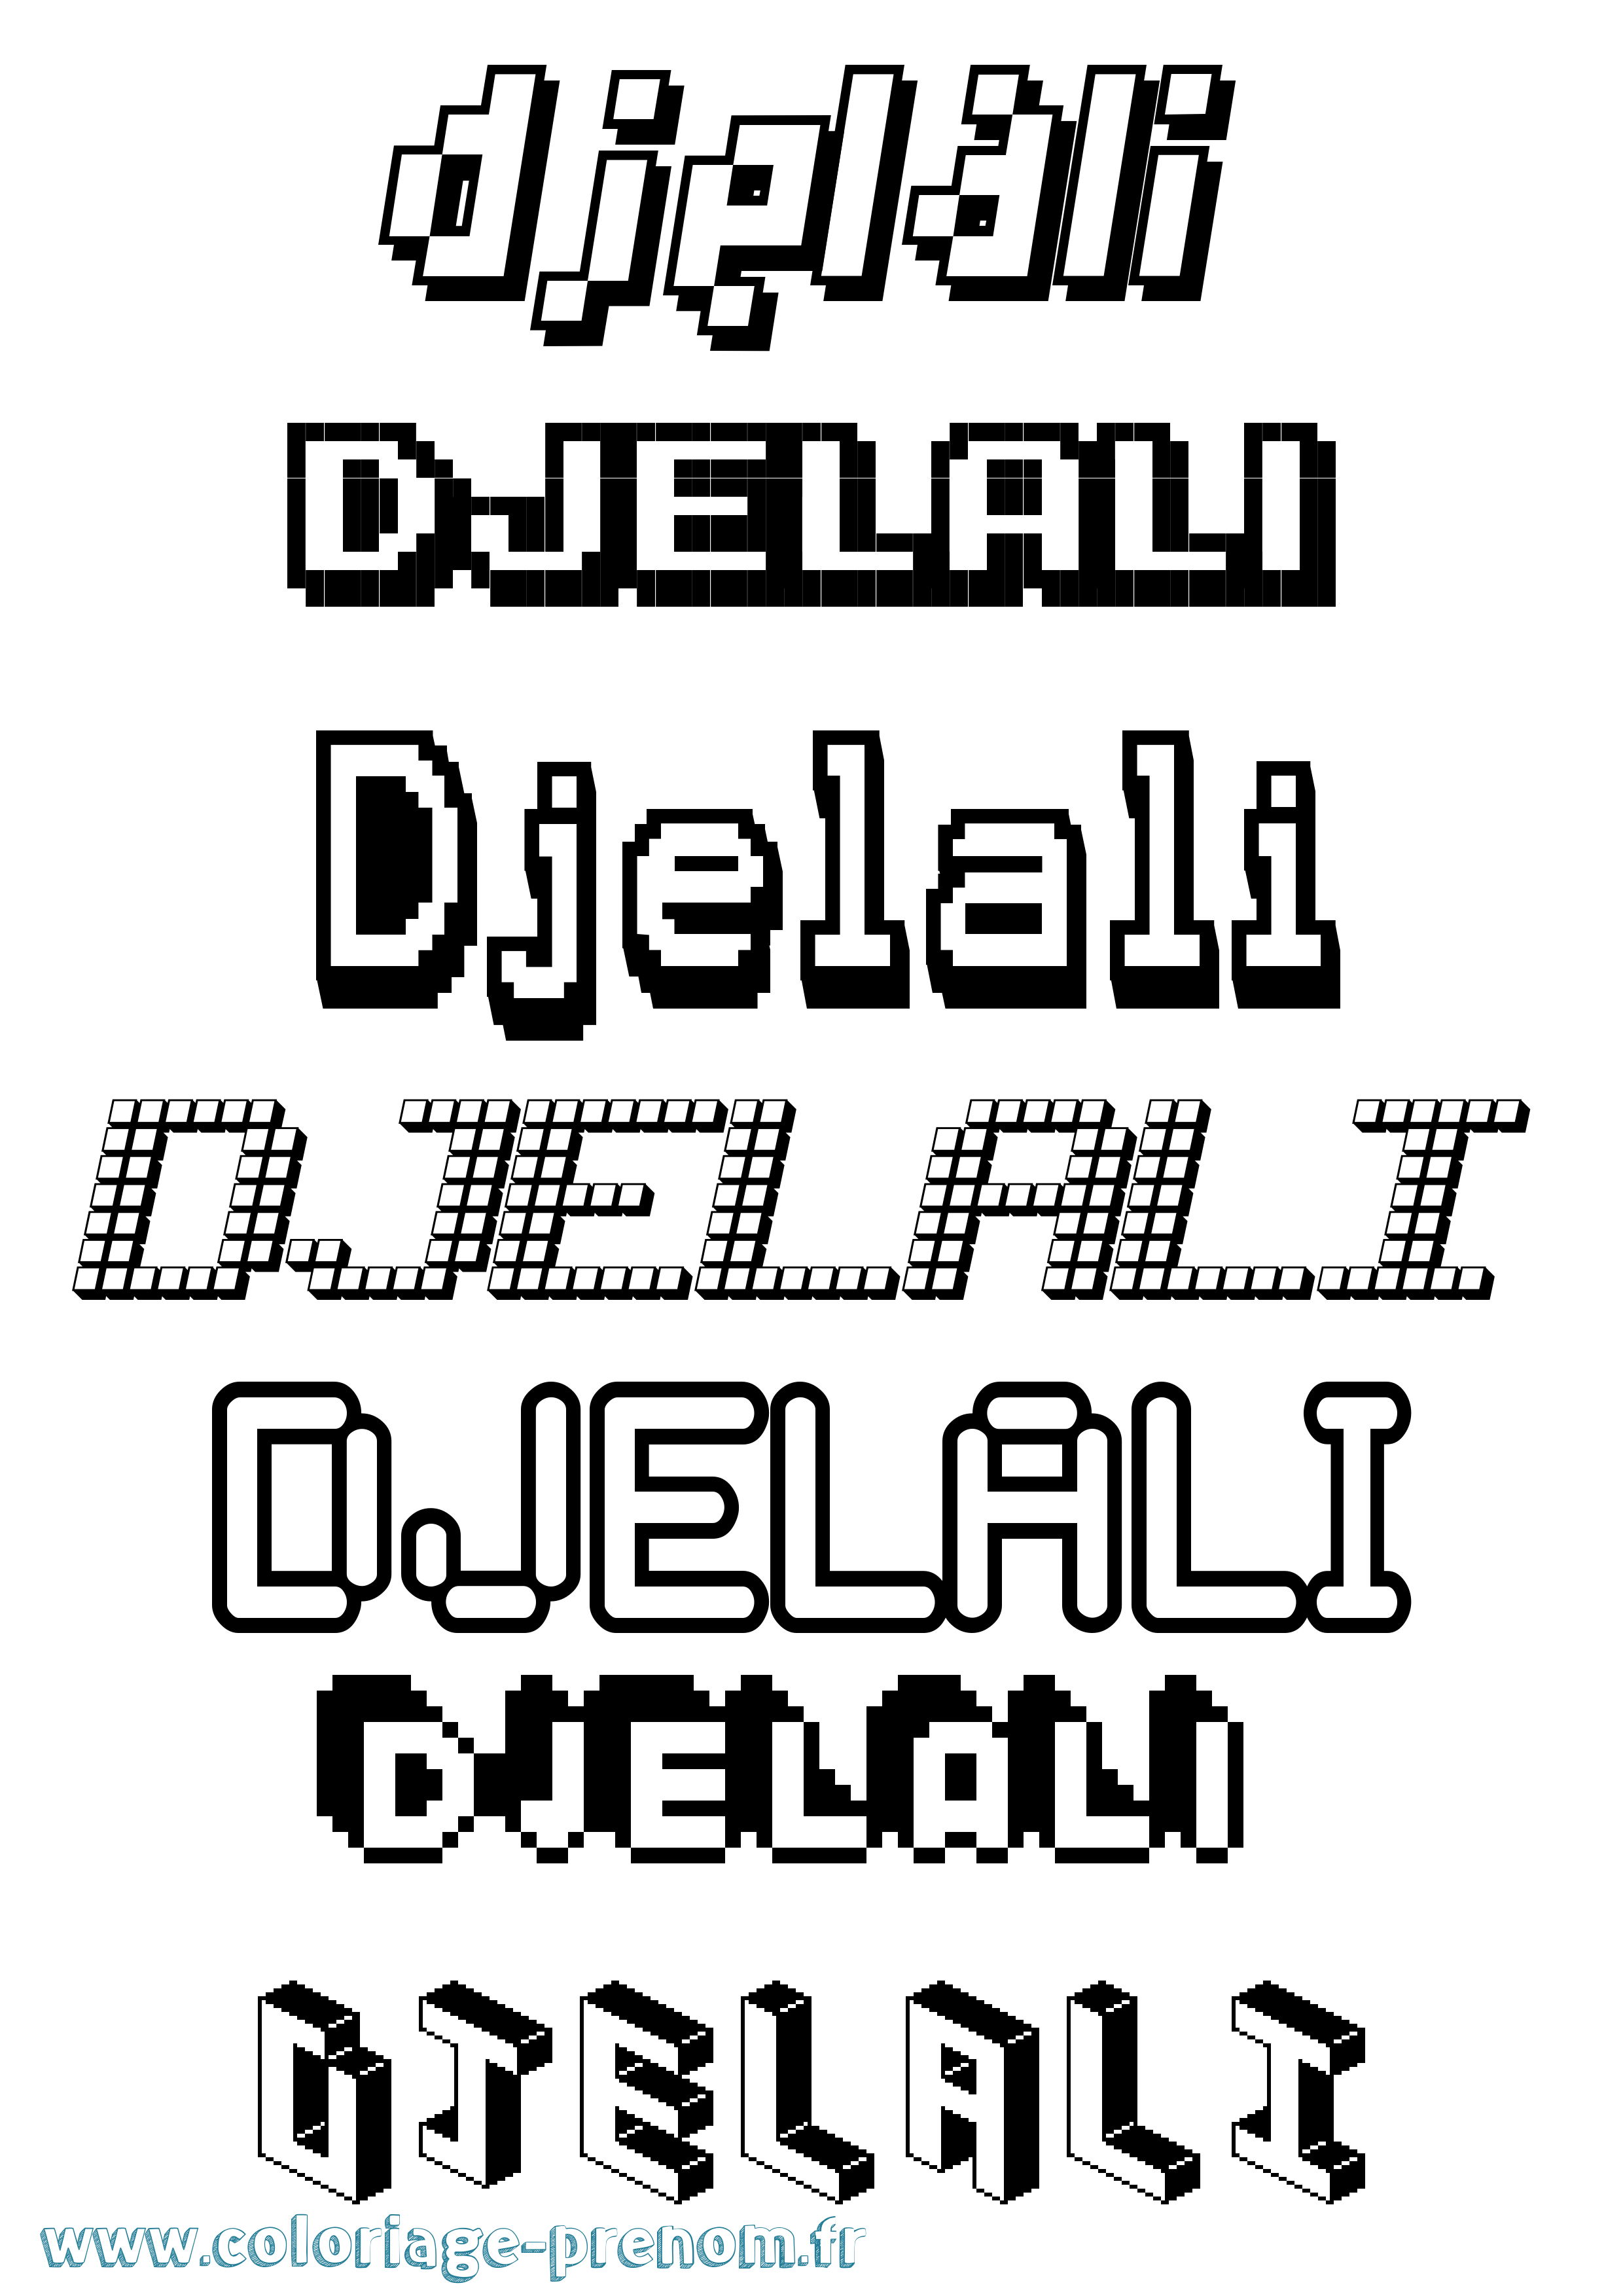 Coloriage prénom Djelali Pixel